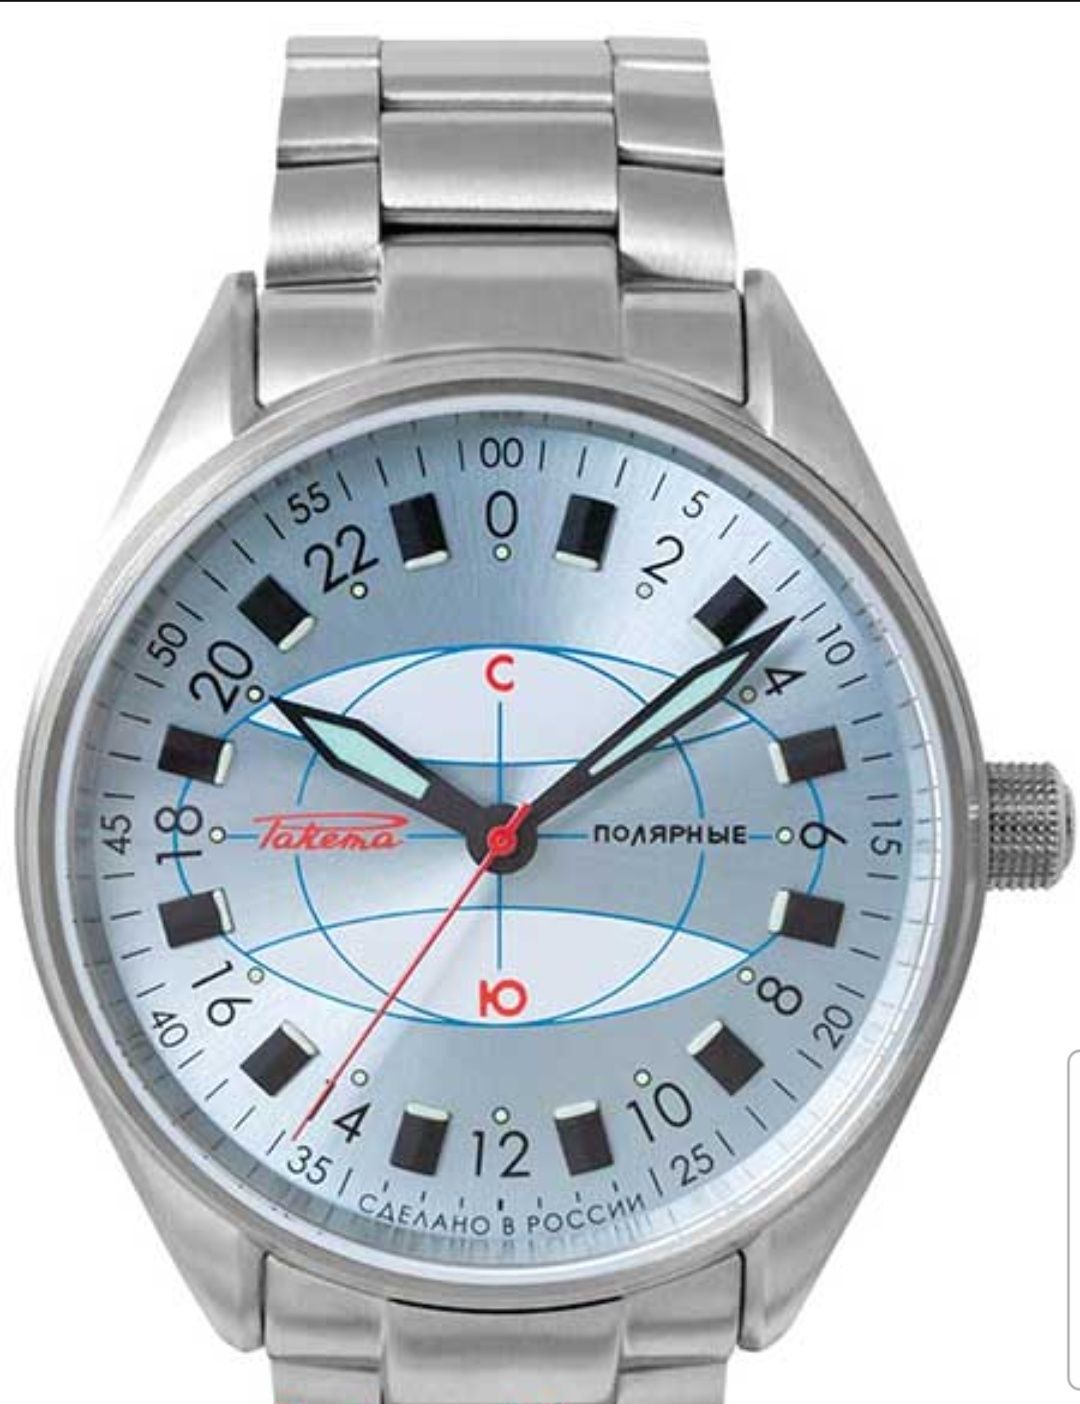 Часы Ракета Полярные 241 (RAKETA Polar 241) W-45-17-30, 0241на подарок